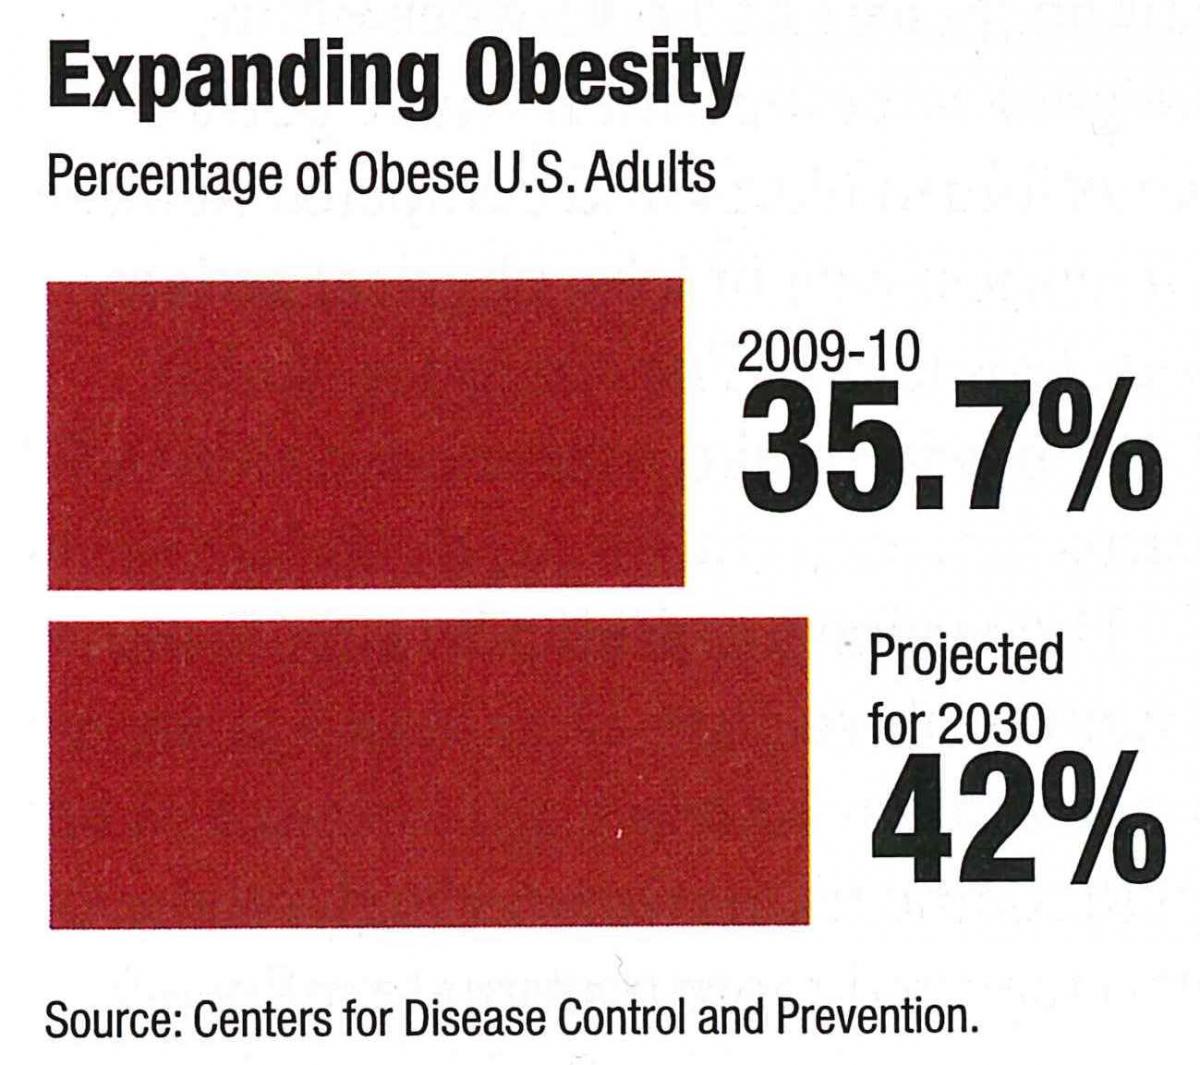 Expanding Obesity